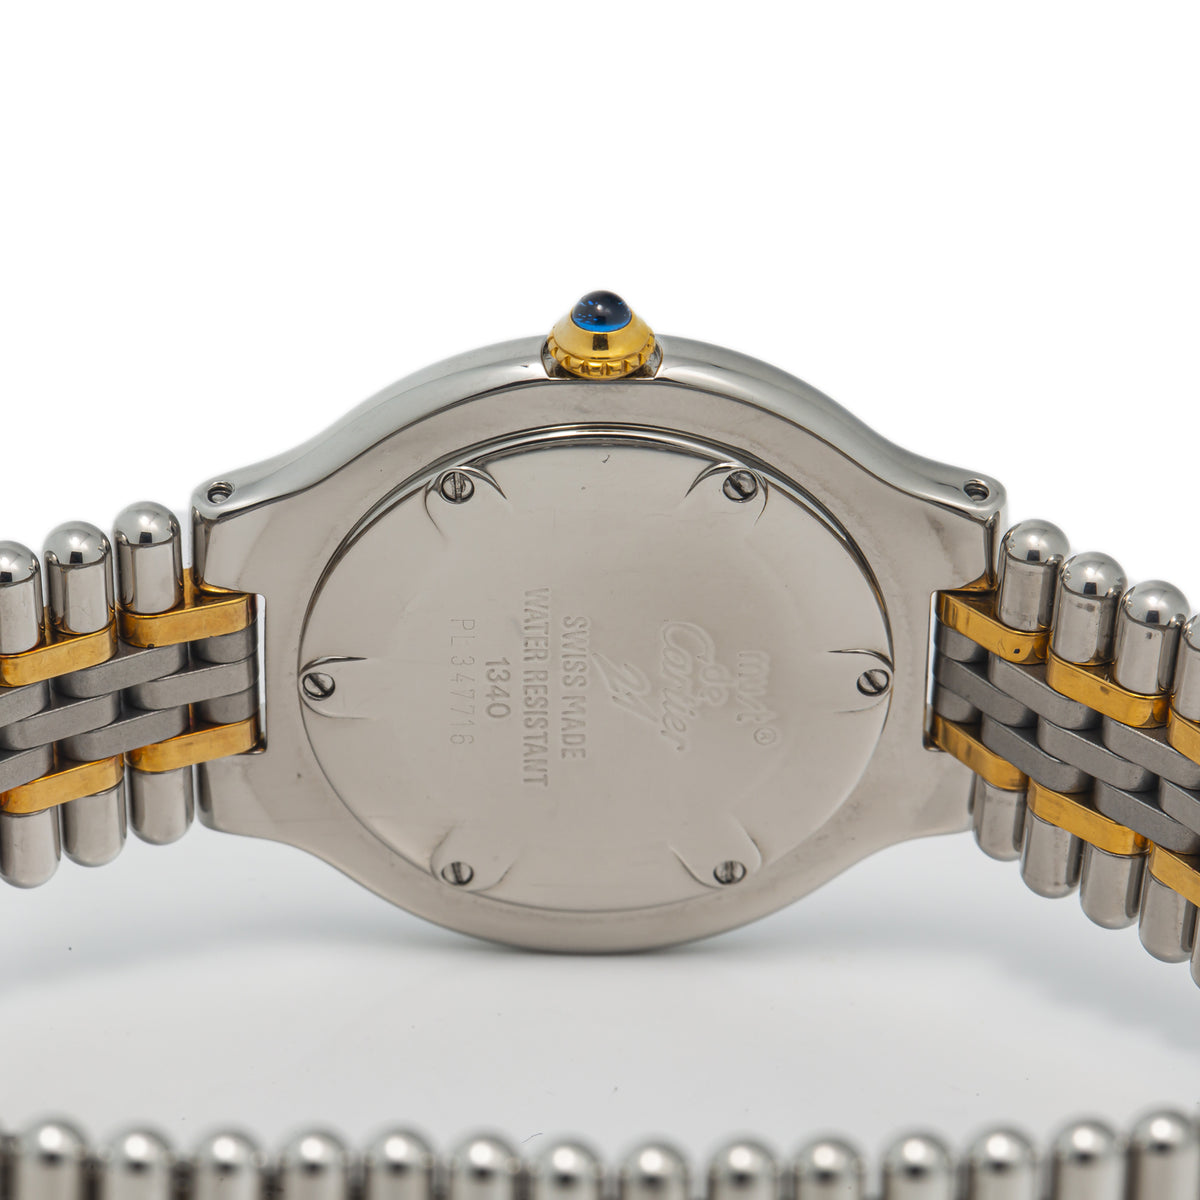 Cartier Must De 21 1340 W10073R6 18k Yellow Gold Steel TwoTone Quartz Watch 28mm